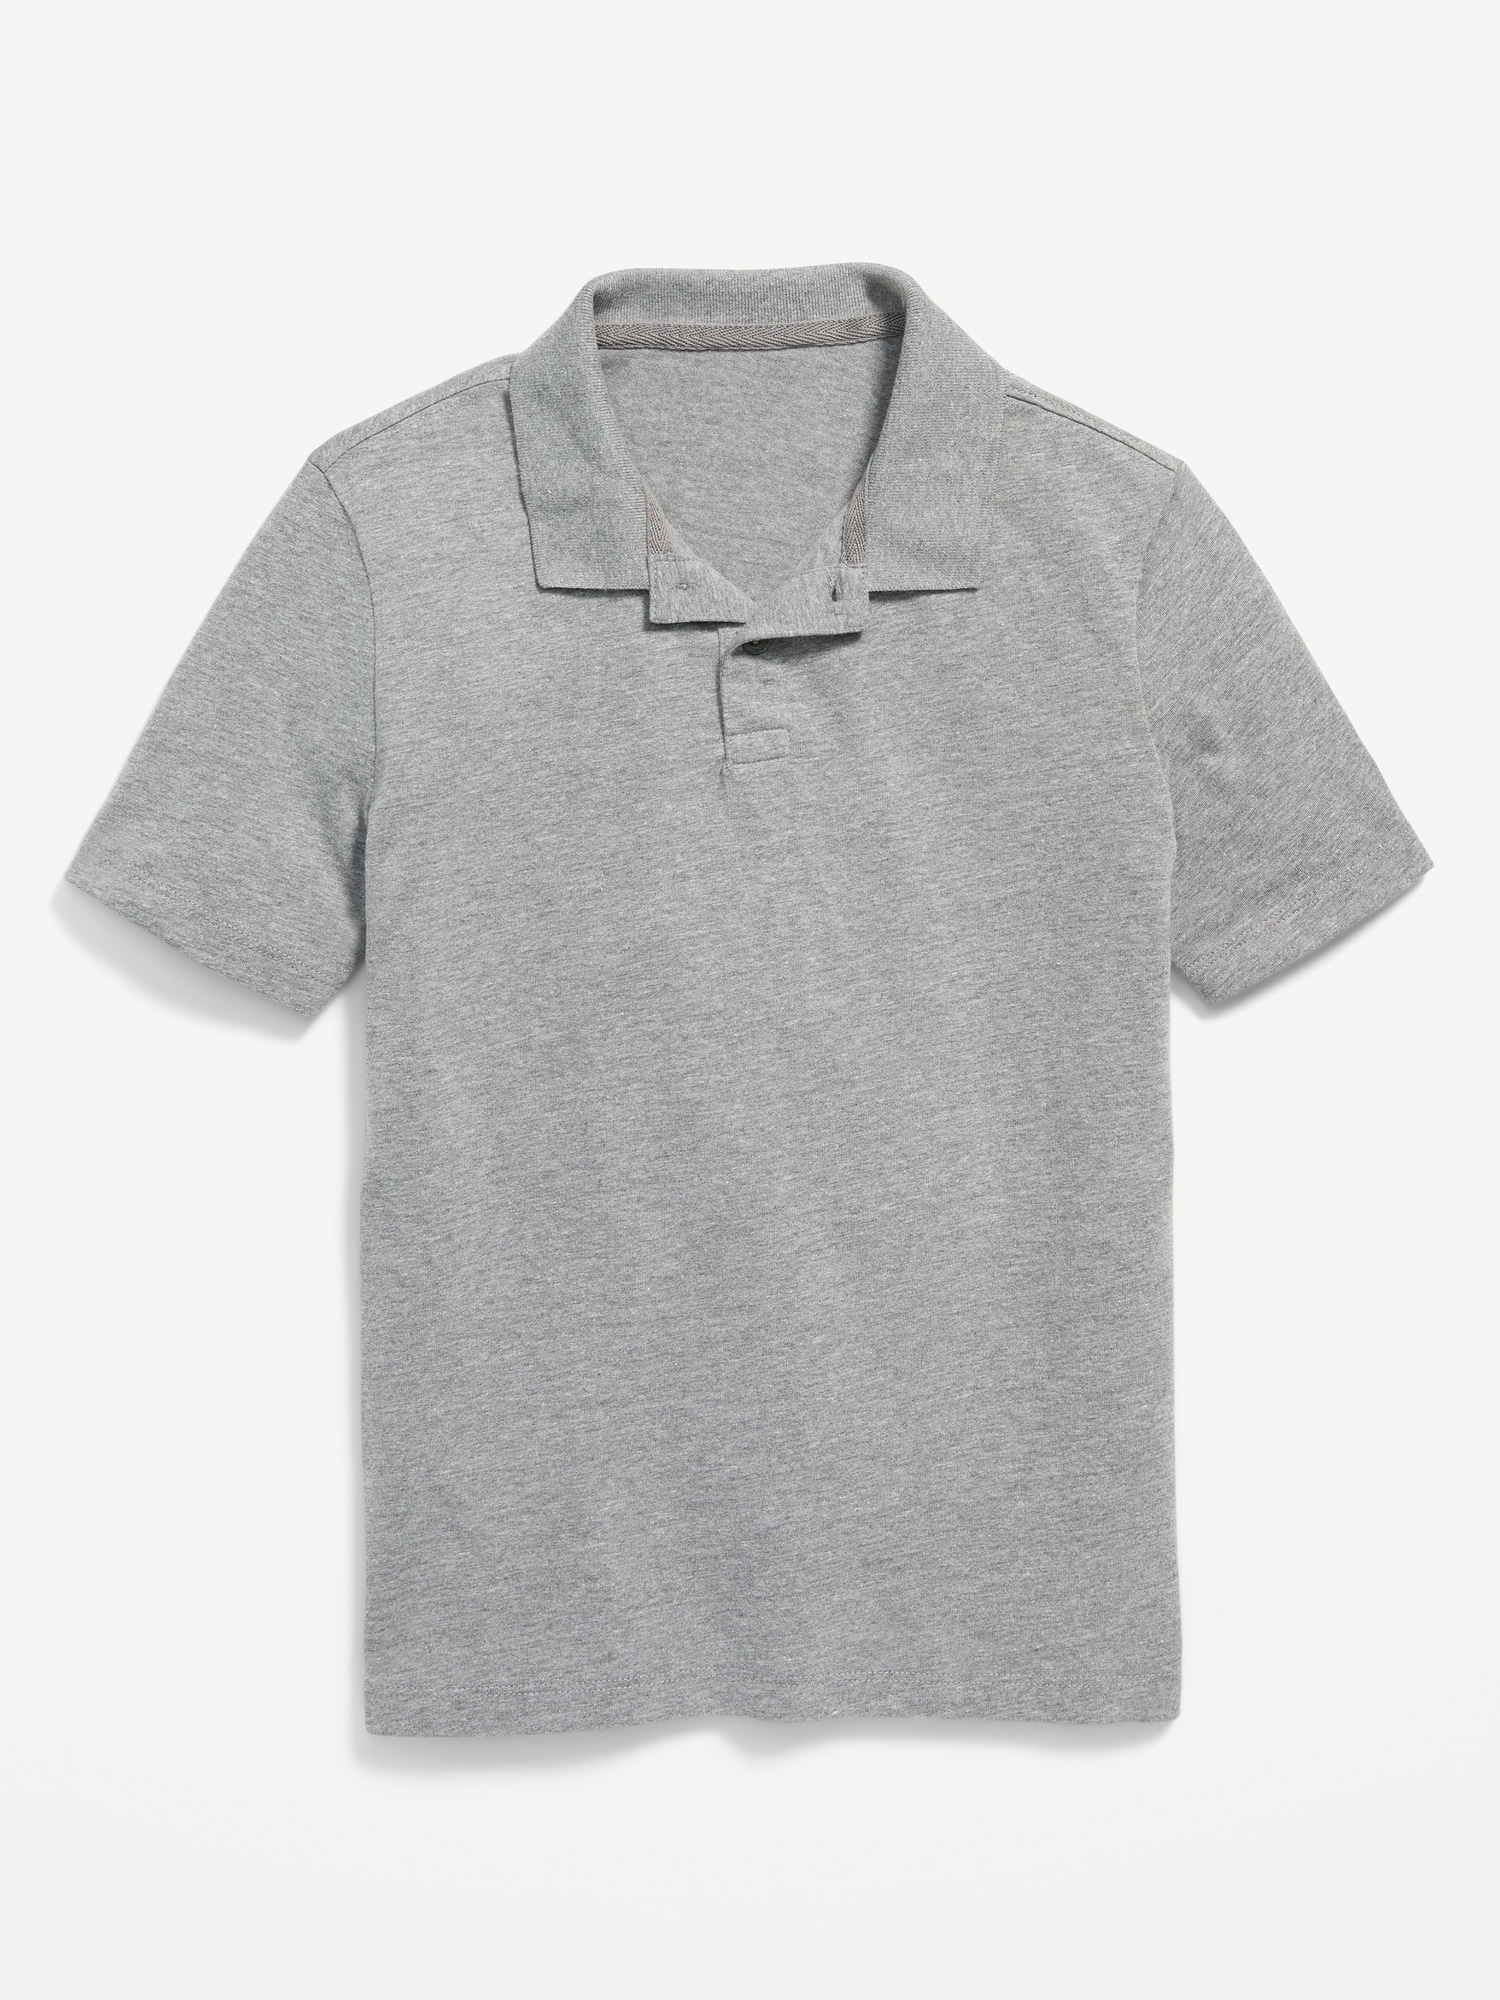 Old Navy School Uniform Jersey-Knit Polo Shirt for Boys gray. 1